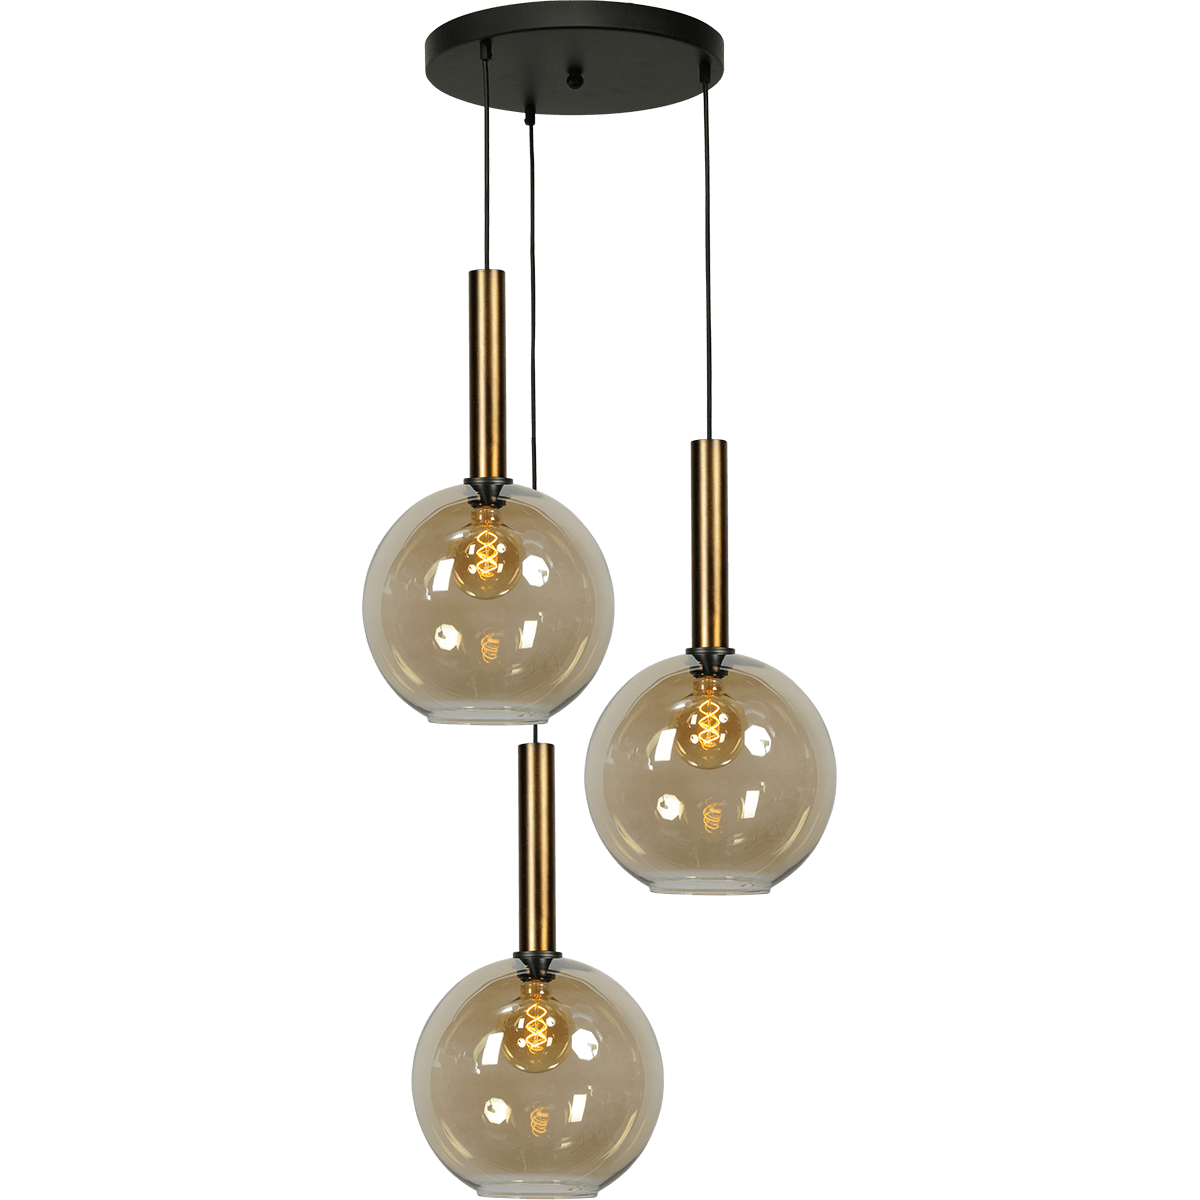 Hanglamp Bella -  3-lichts mat zwart/antiek brons Ø35cm - zwarte pvc kabel 150cm + glas 3x 62260-05-20-30 -  - MASTERLIGHT